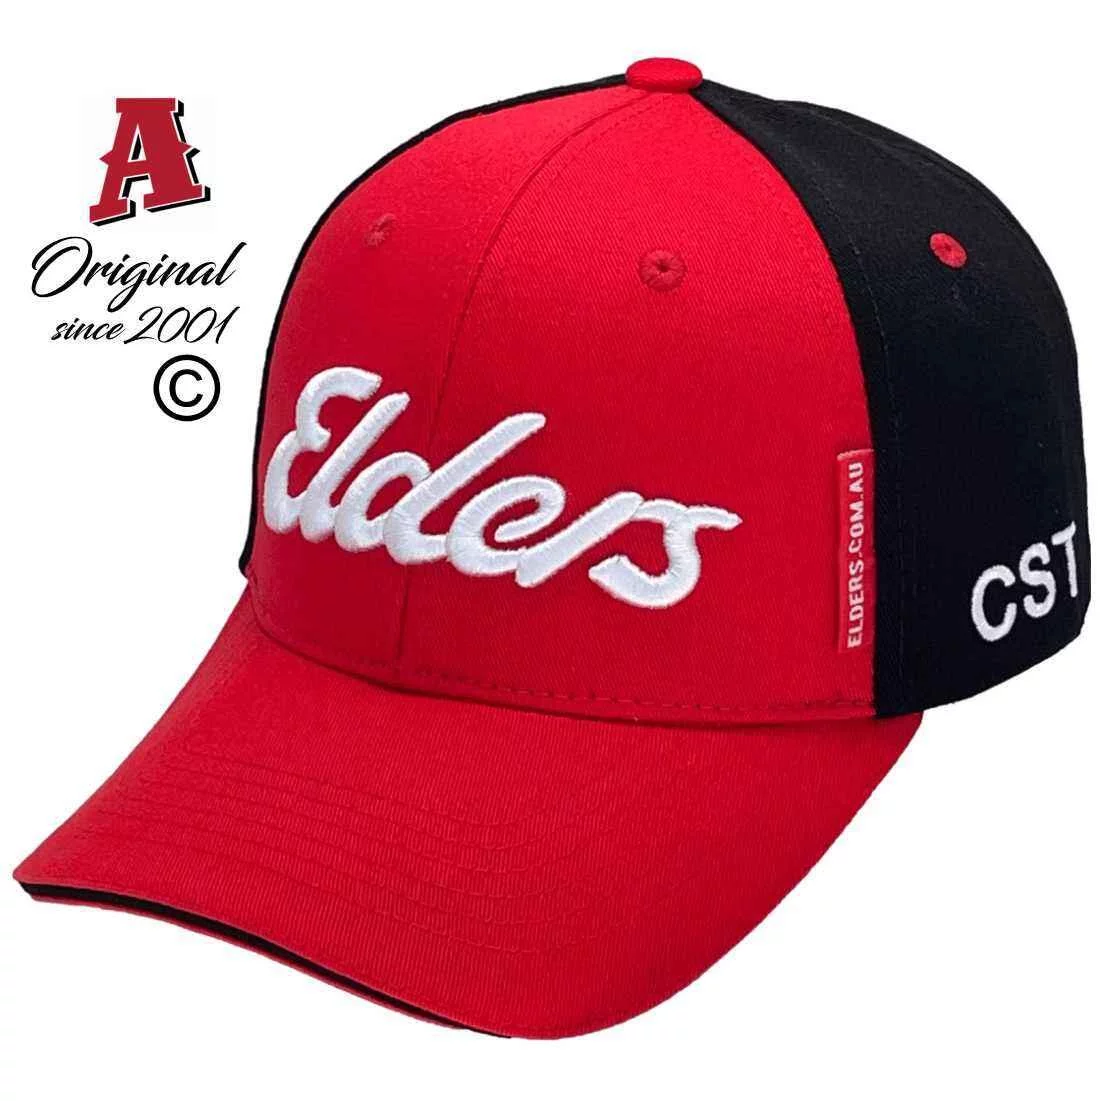 Elders Toowoomba Qld Aussie Custom Baseball Hat with Australian HeadFit Crown and Sandwich Brim Red Black